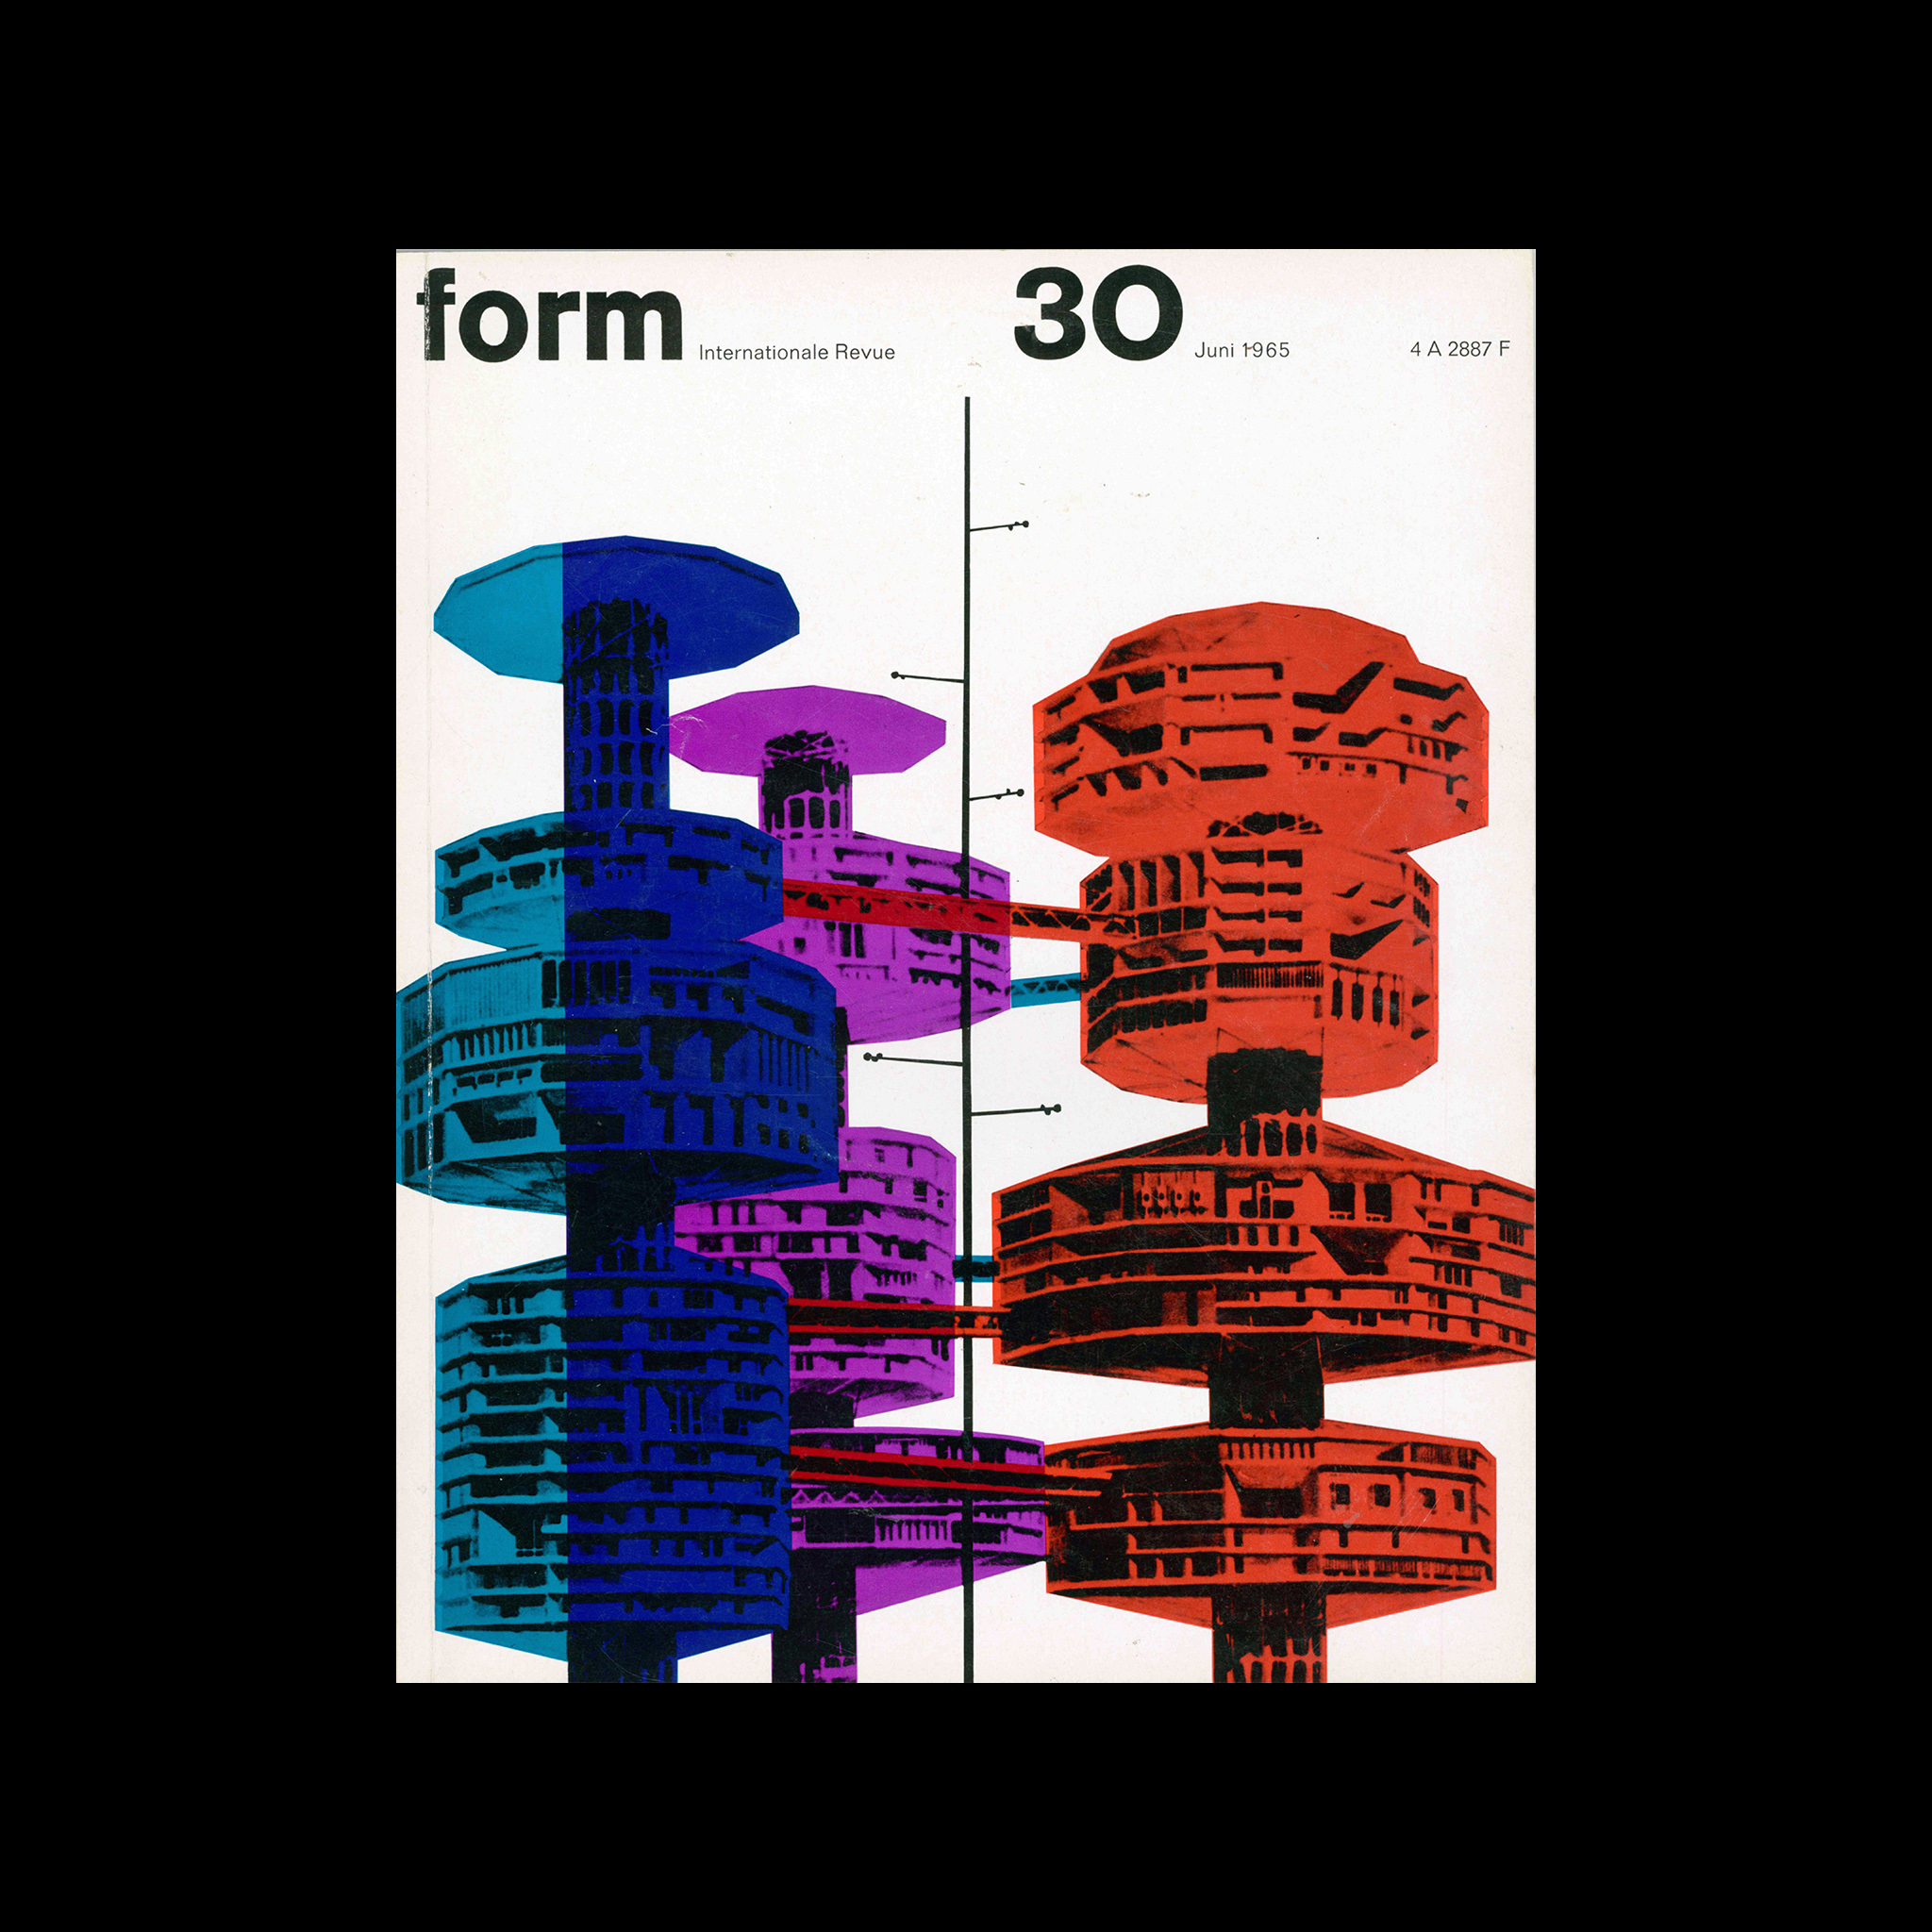 Form, Internationale Revue 30, June 1965. Designed by Karl Oskar Blase 